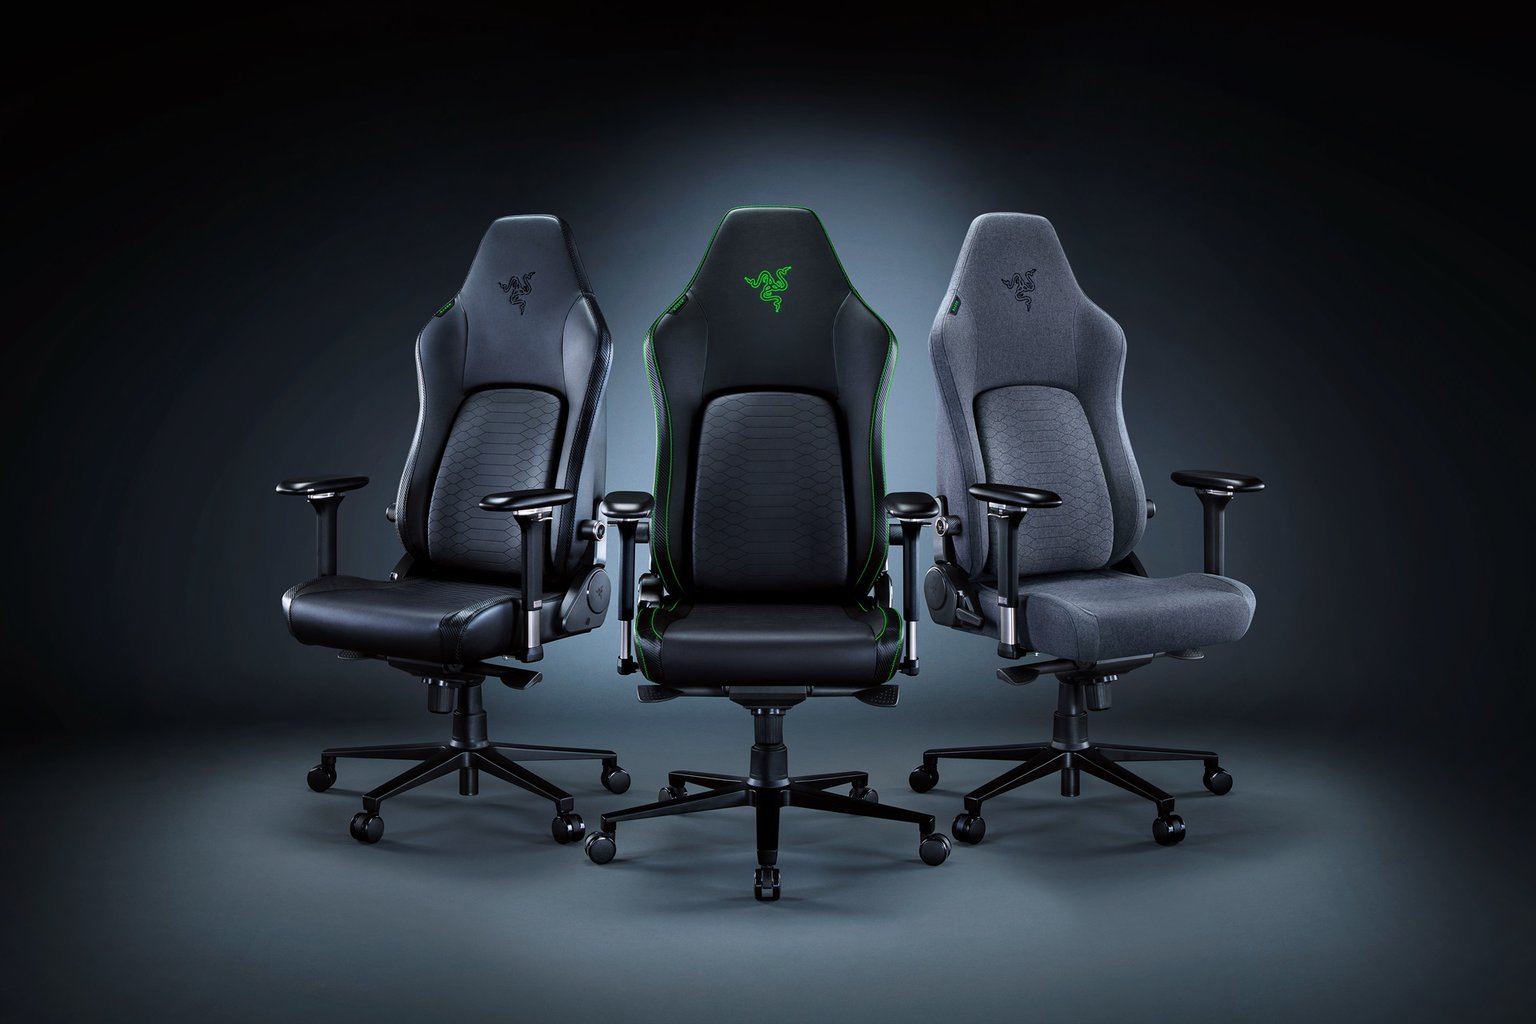 Razer lanza su nueva silla gaming Razer Iskur V2